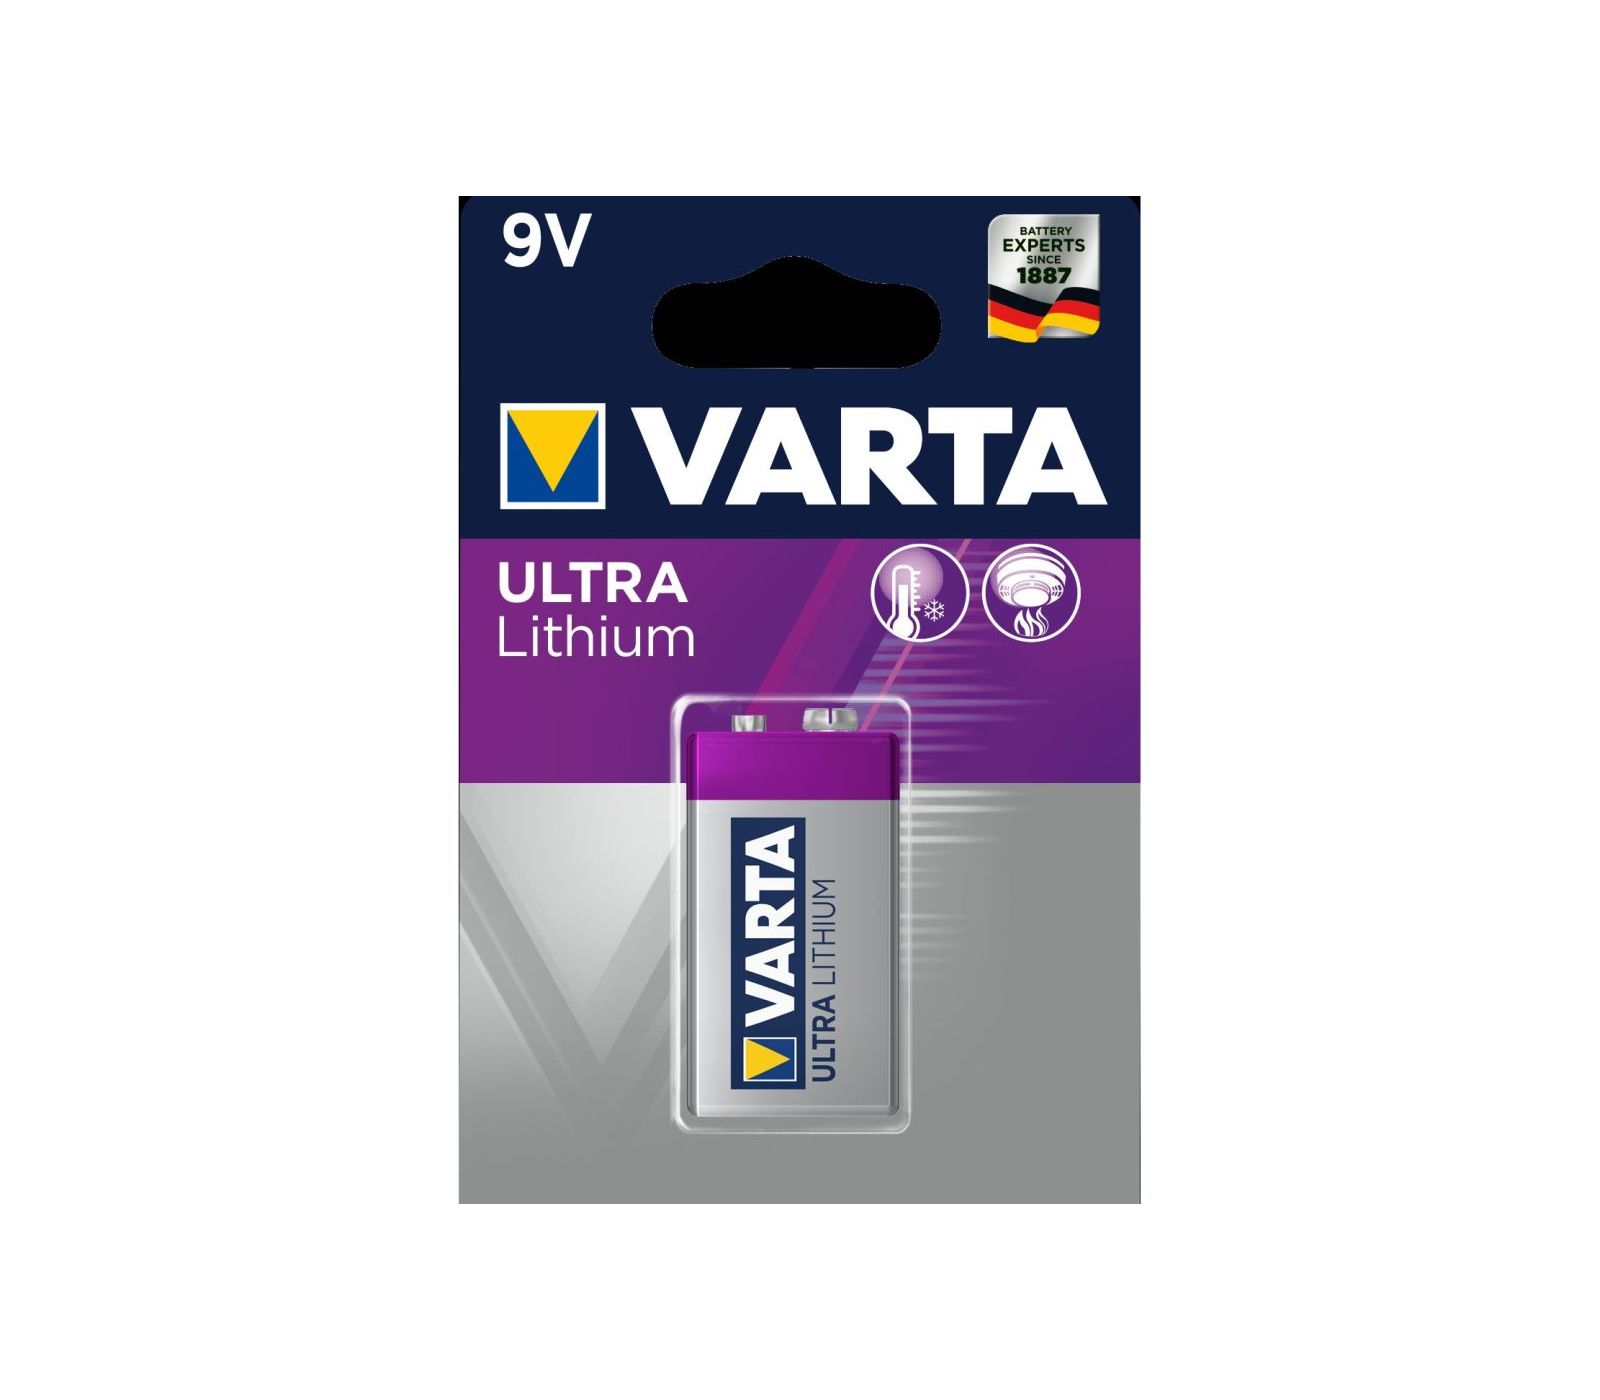 Varta Ultra Lithium 9v